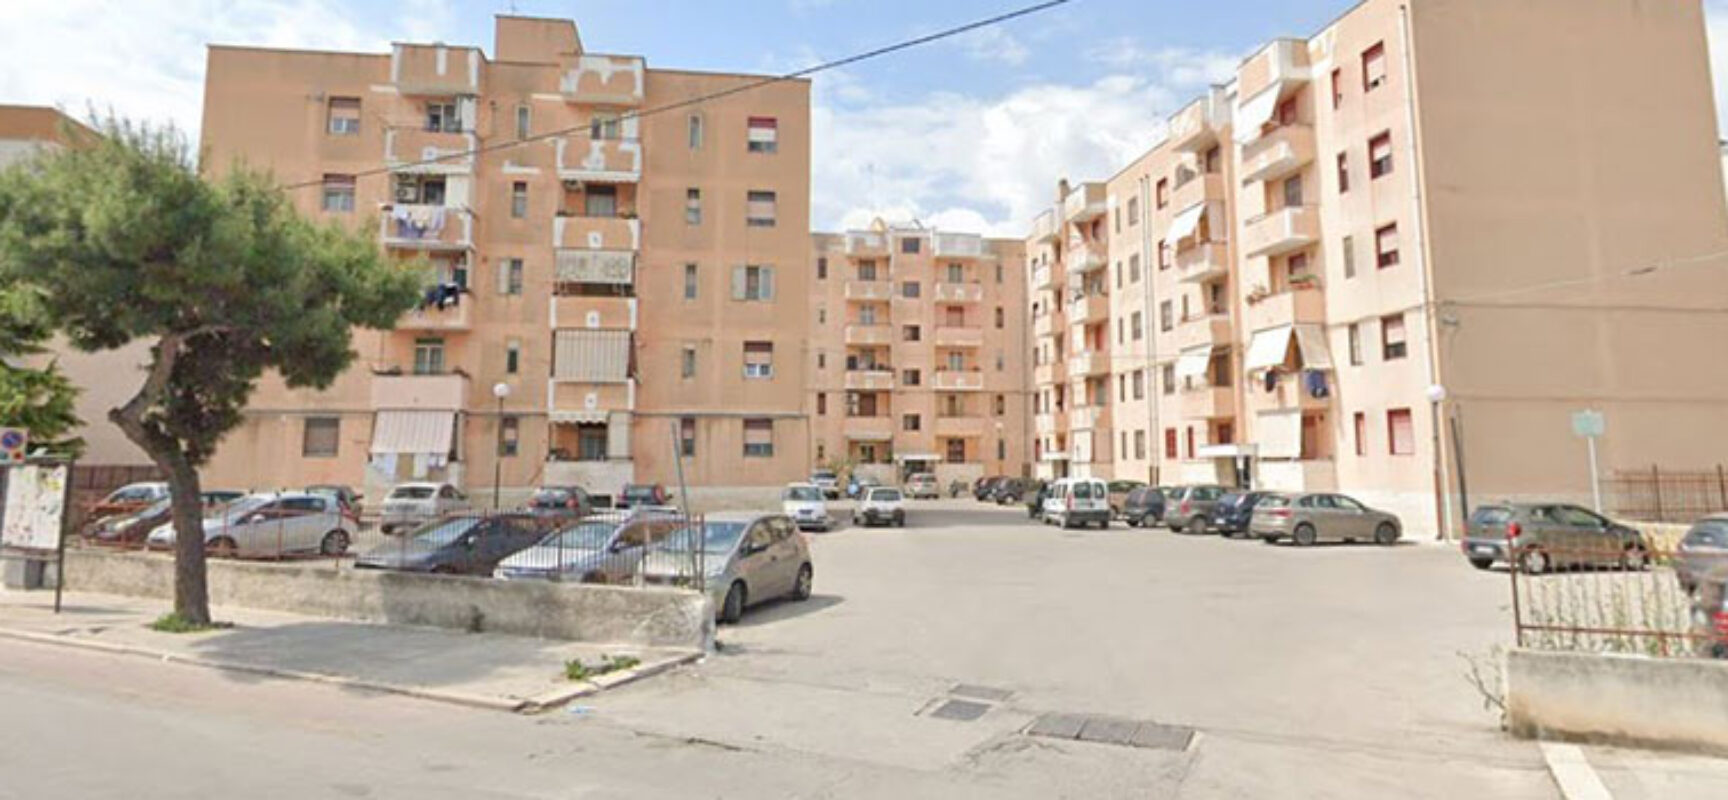 Arca Puglia: stanziati oltre 9 milioni di euro per ristrutturazione case popolari a Bisceglie